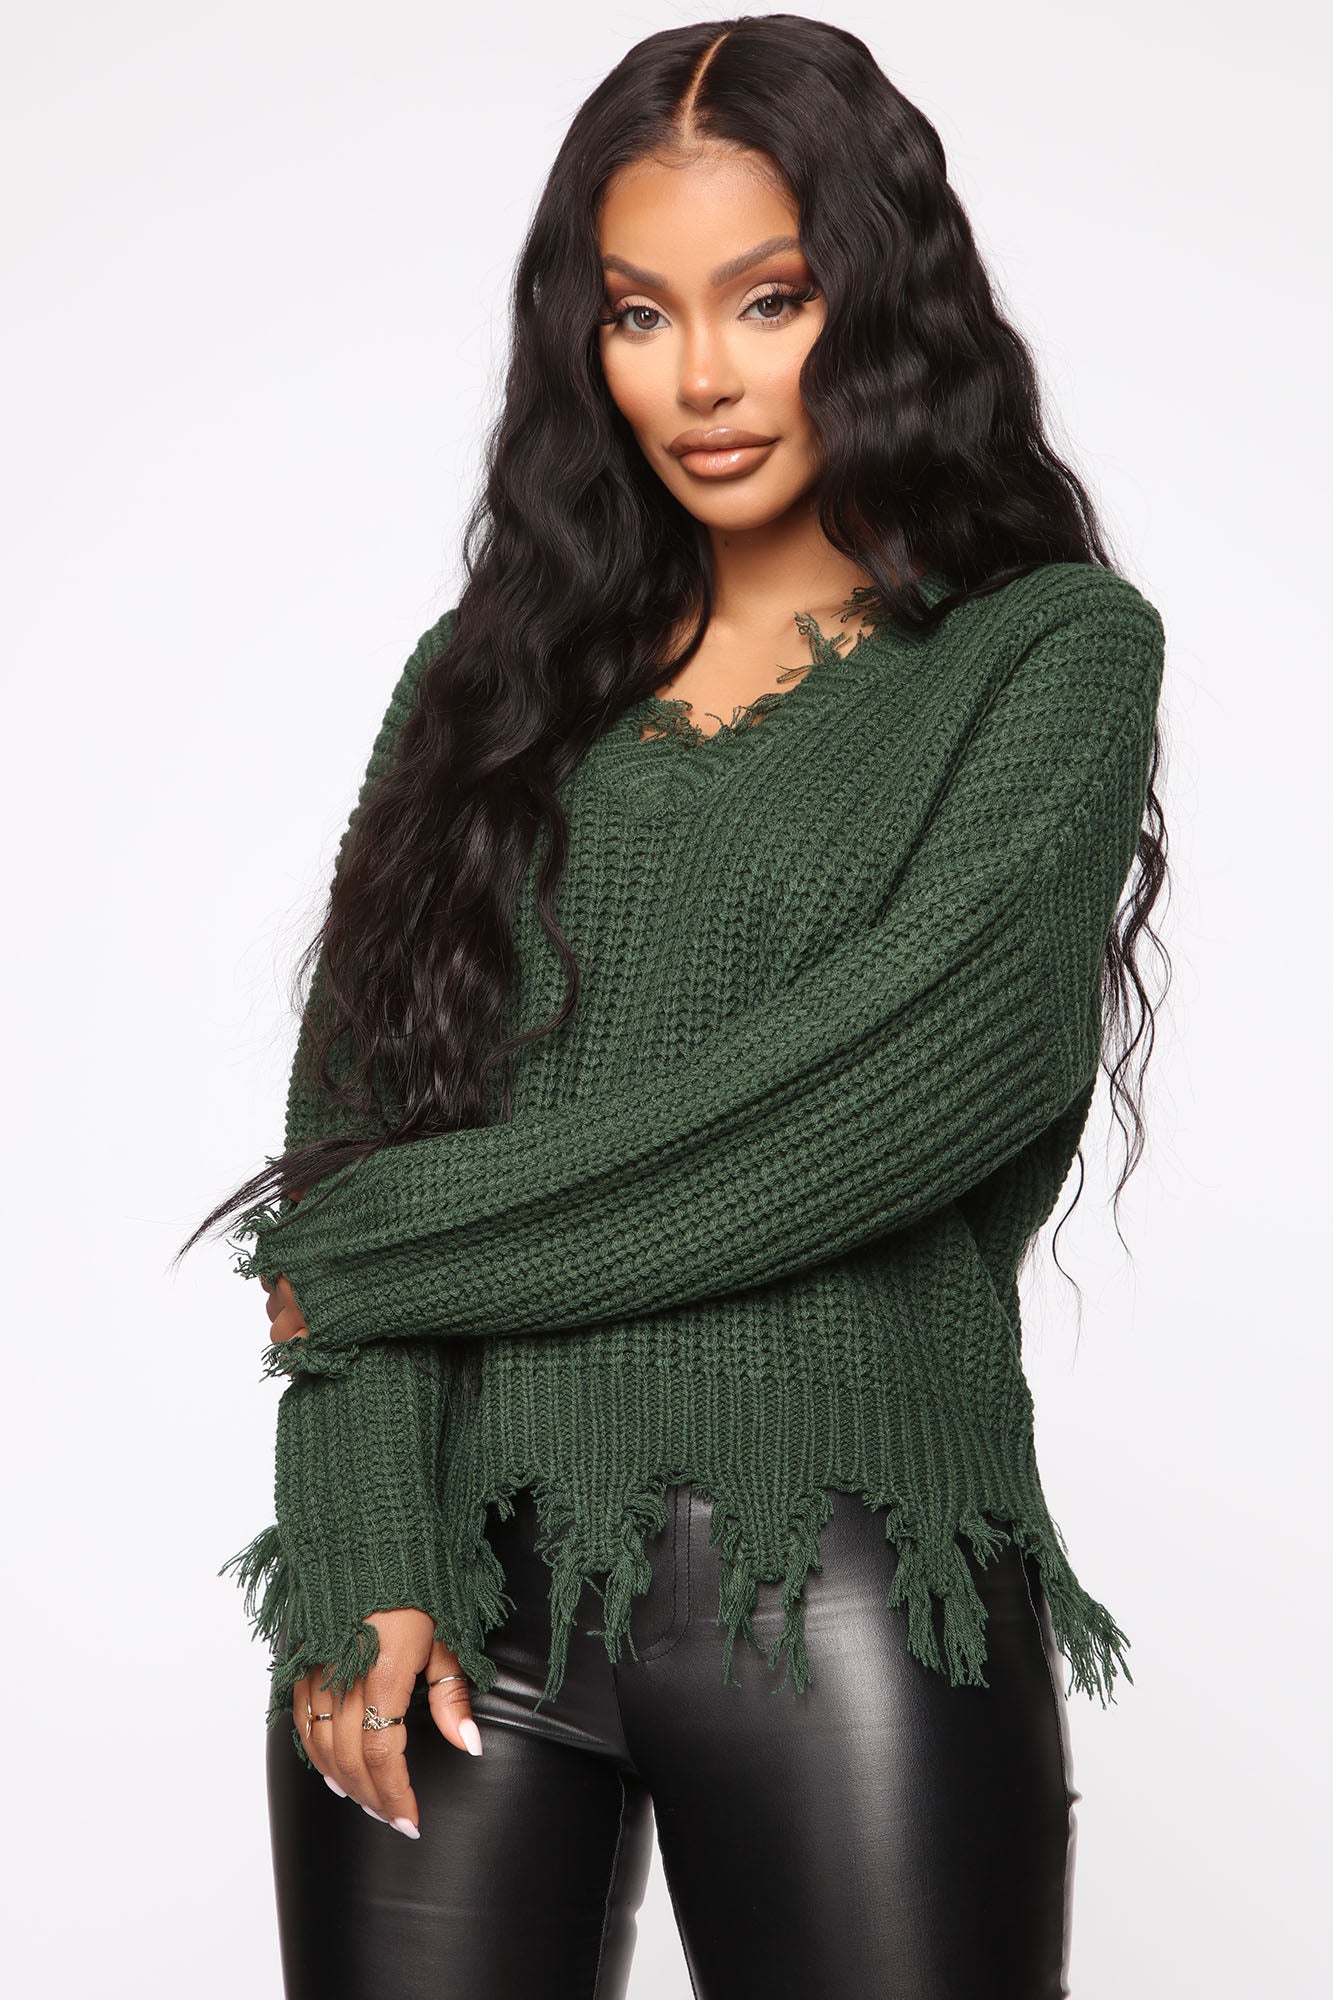 Cute As Always Crochet Top - Oatmeal, Fashion Nova, Sweaters